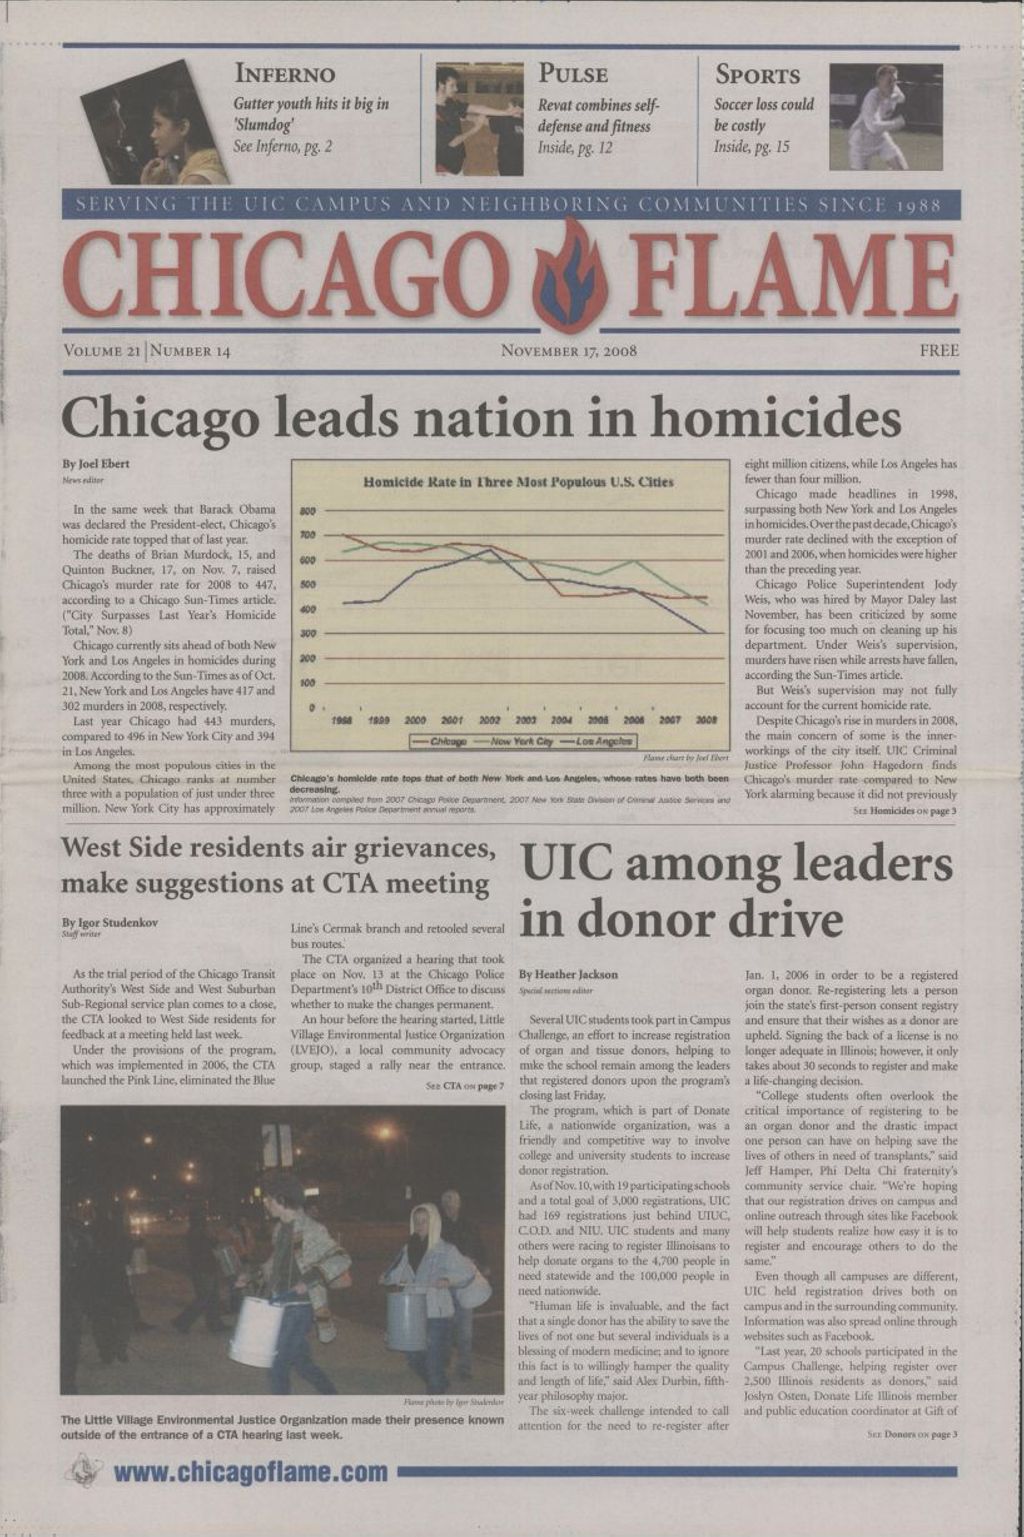 Chicago Flame (November 17, 2008)